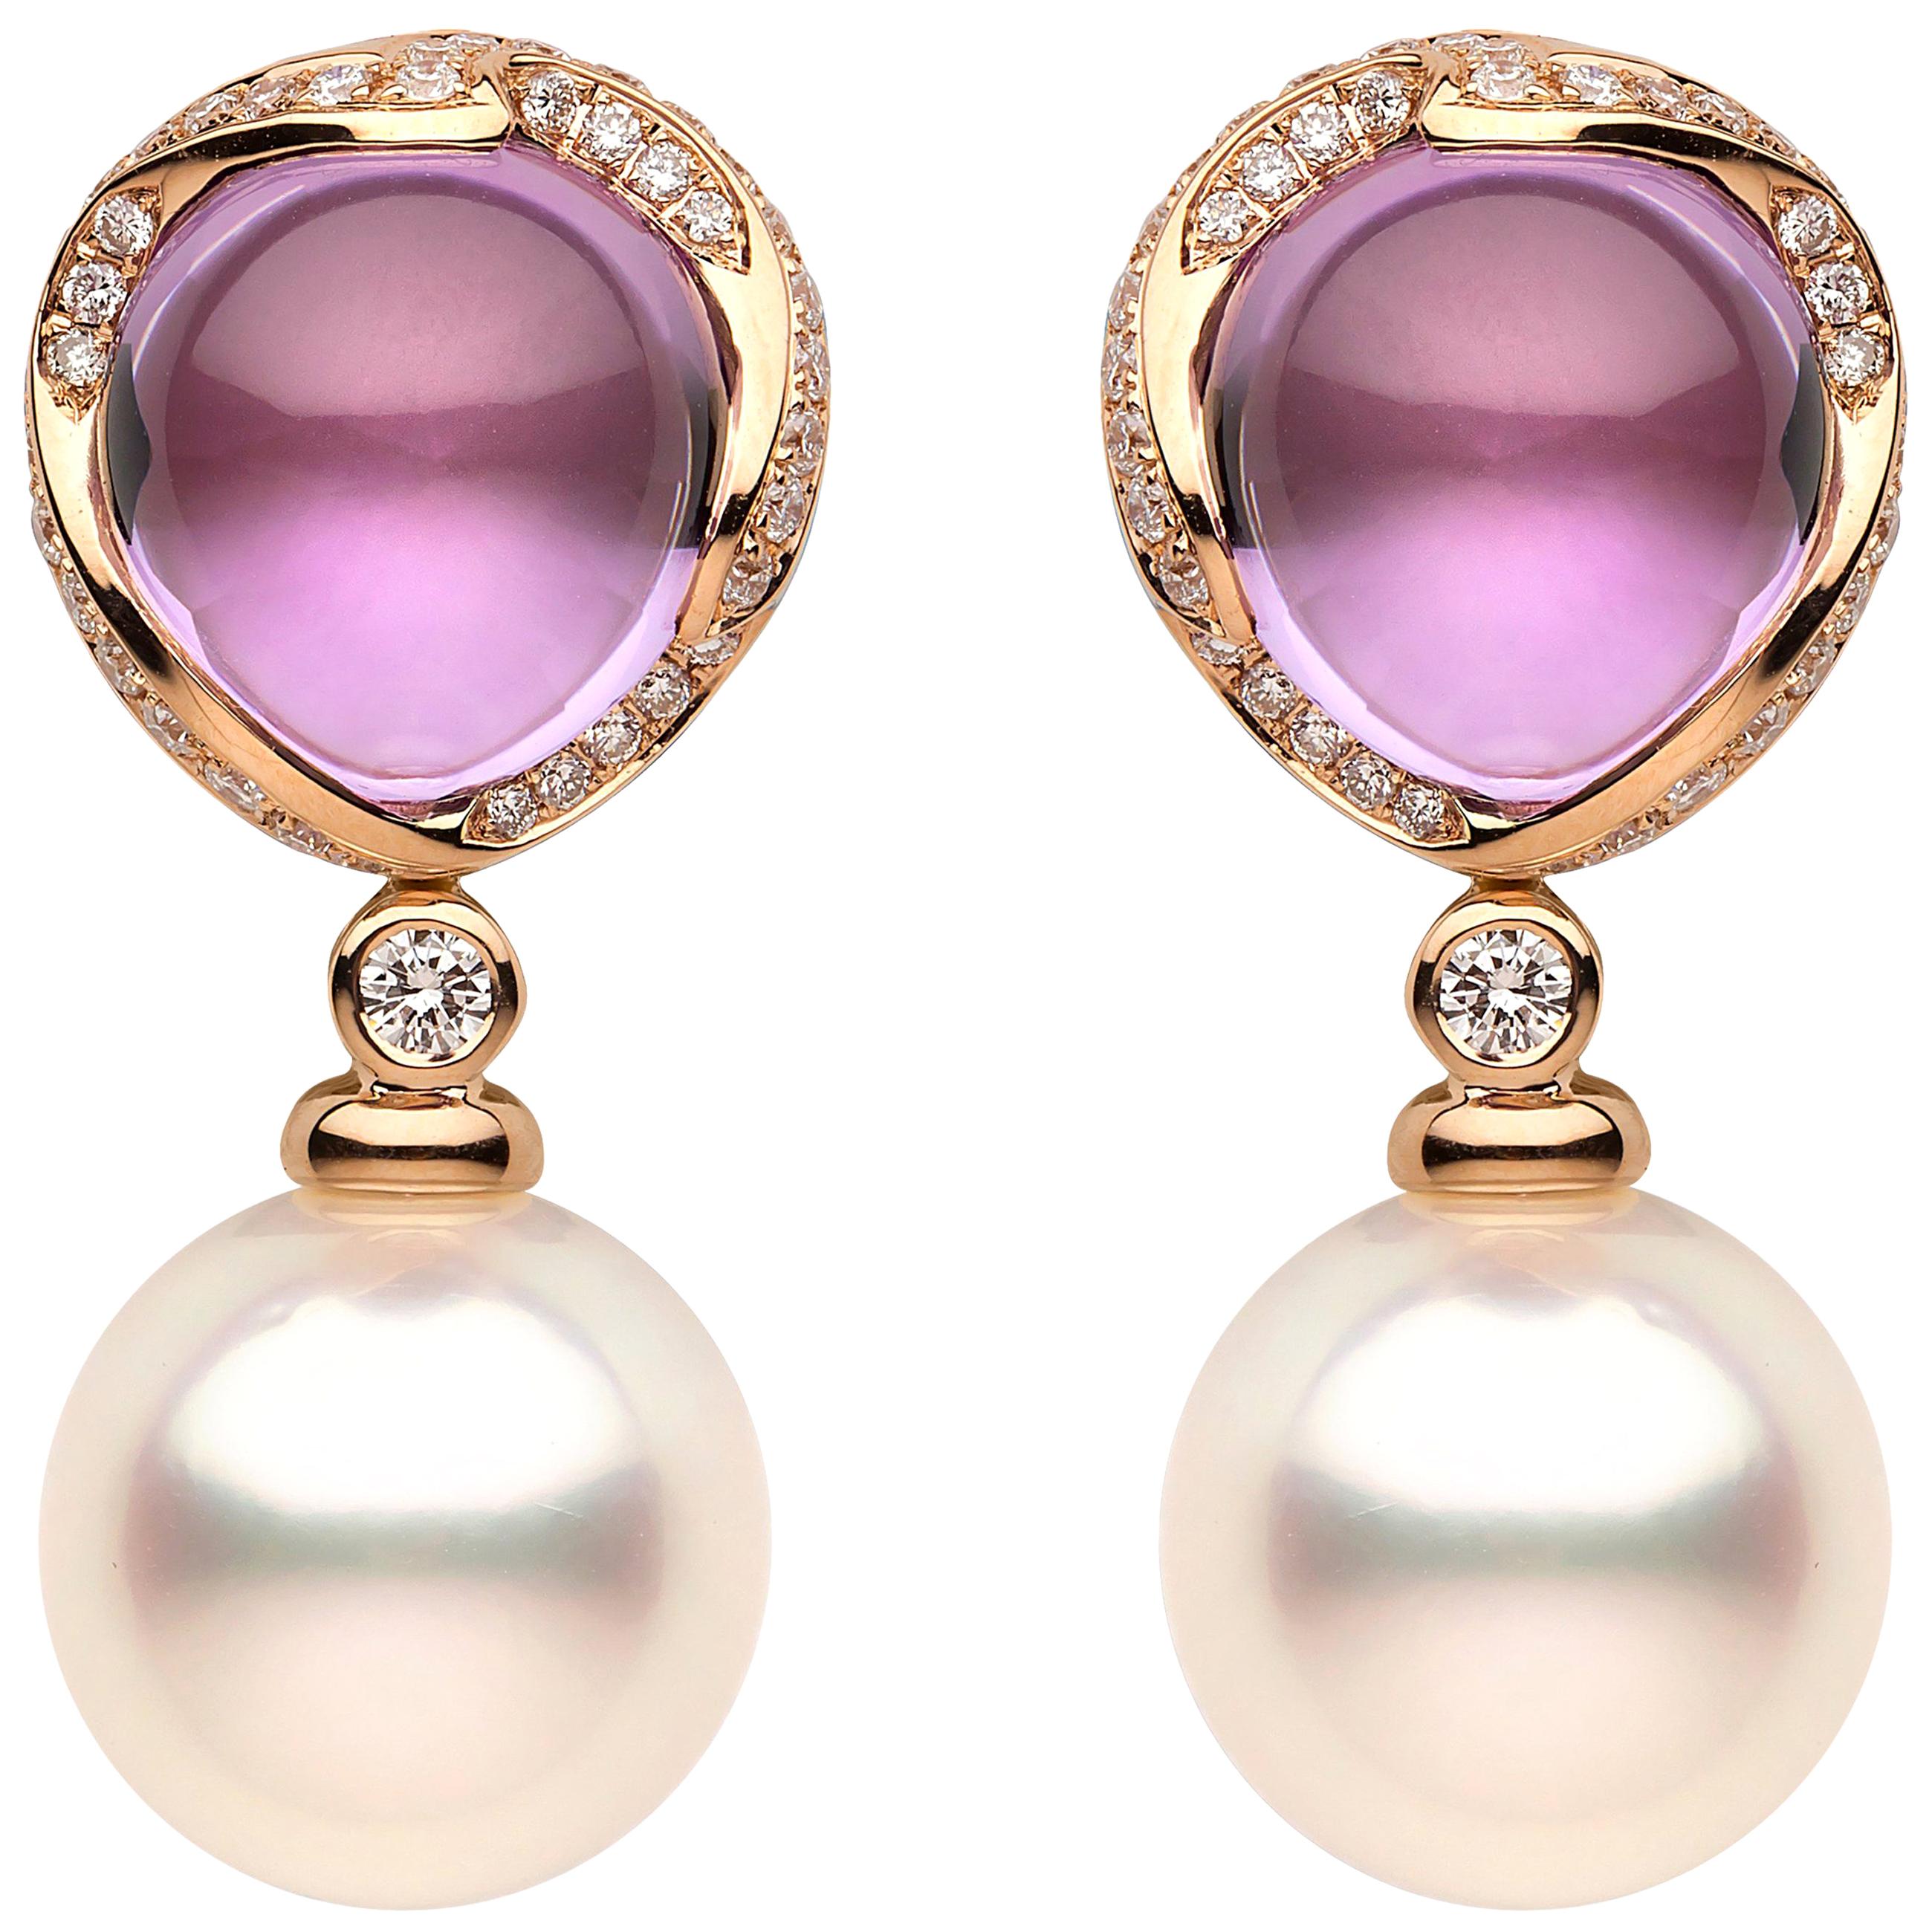 Yoko London South Sea Pearl Diamond and Amethyst Earrings in 18 Karat Rose Gold